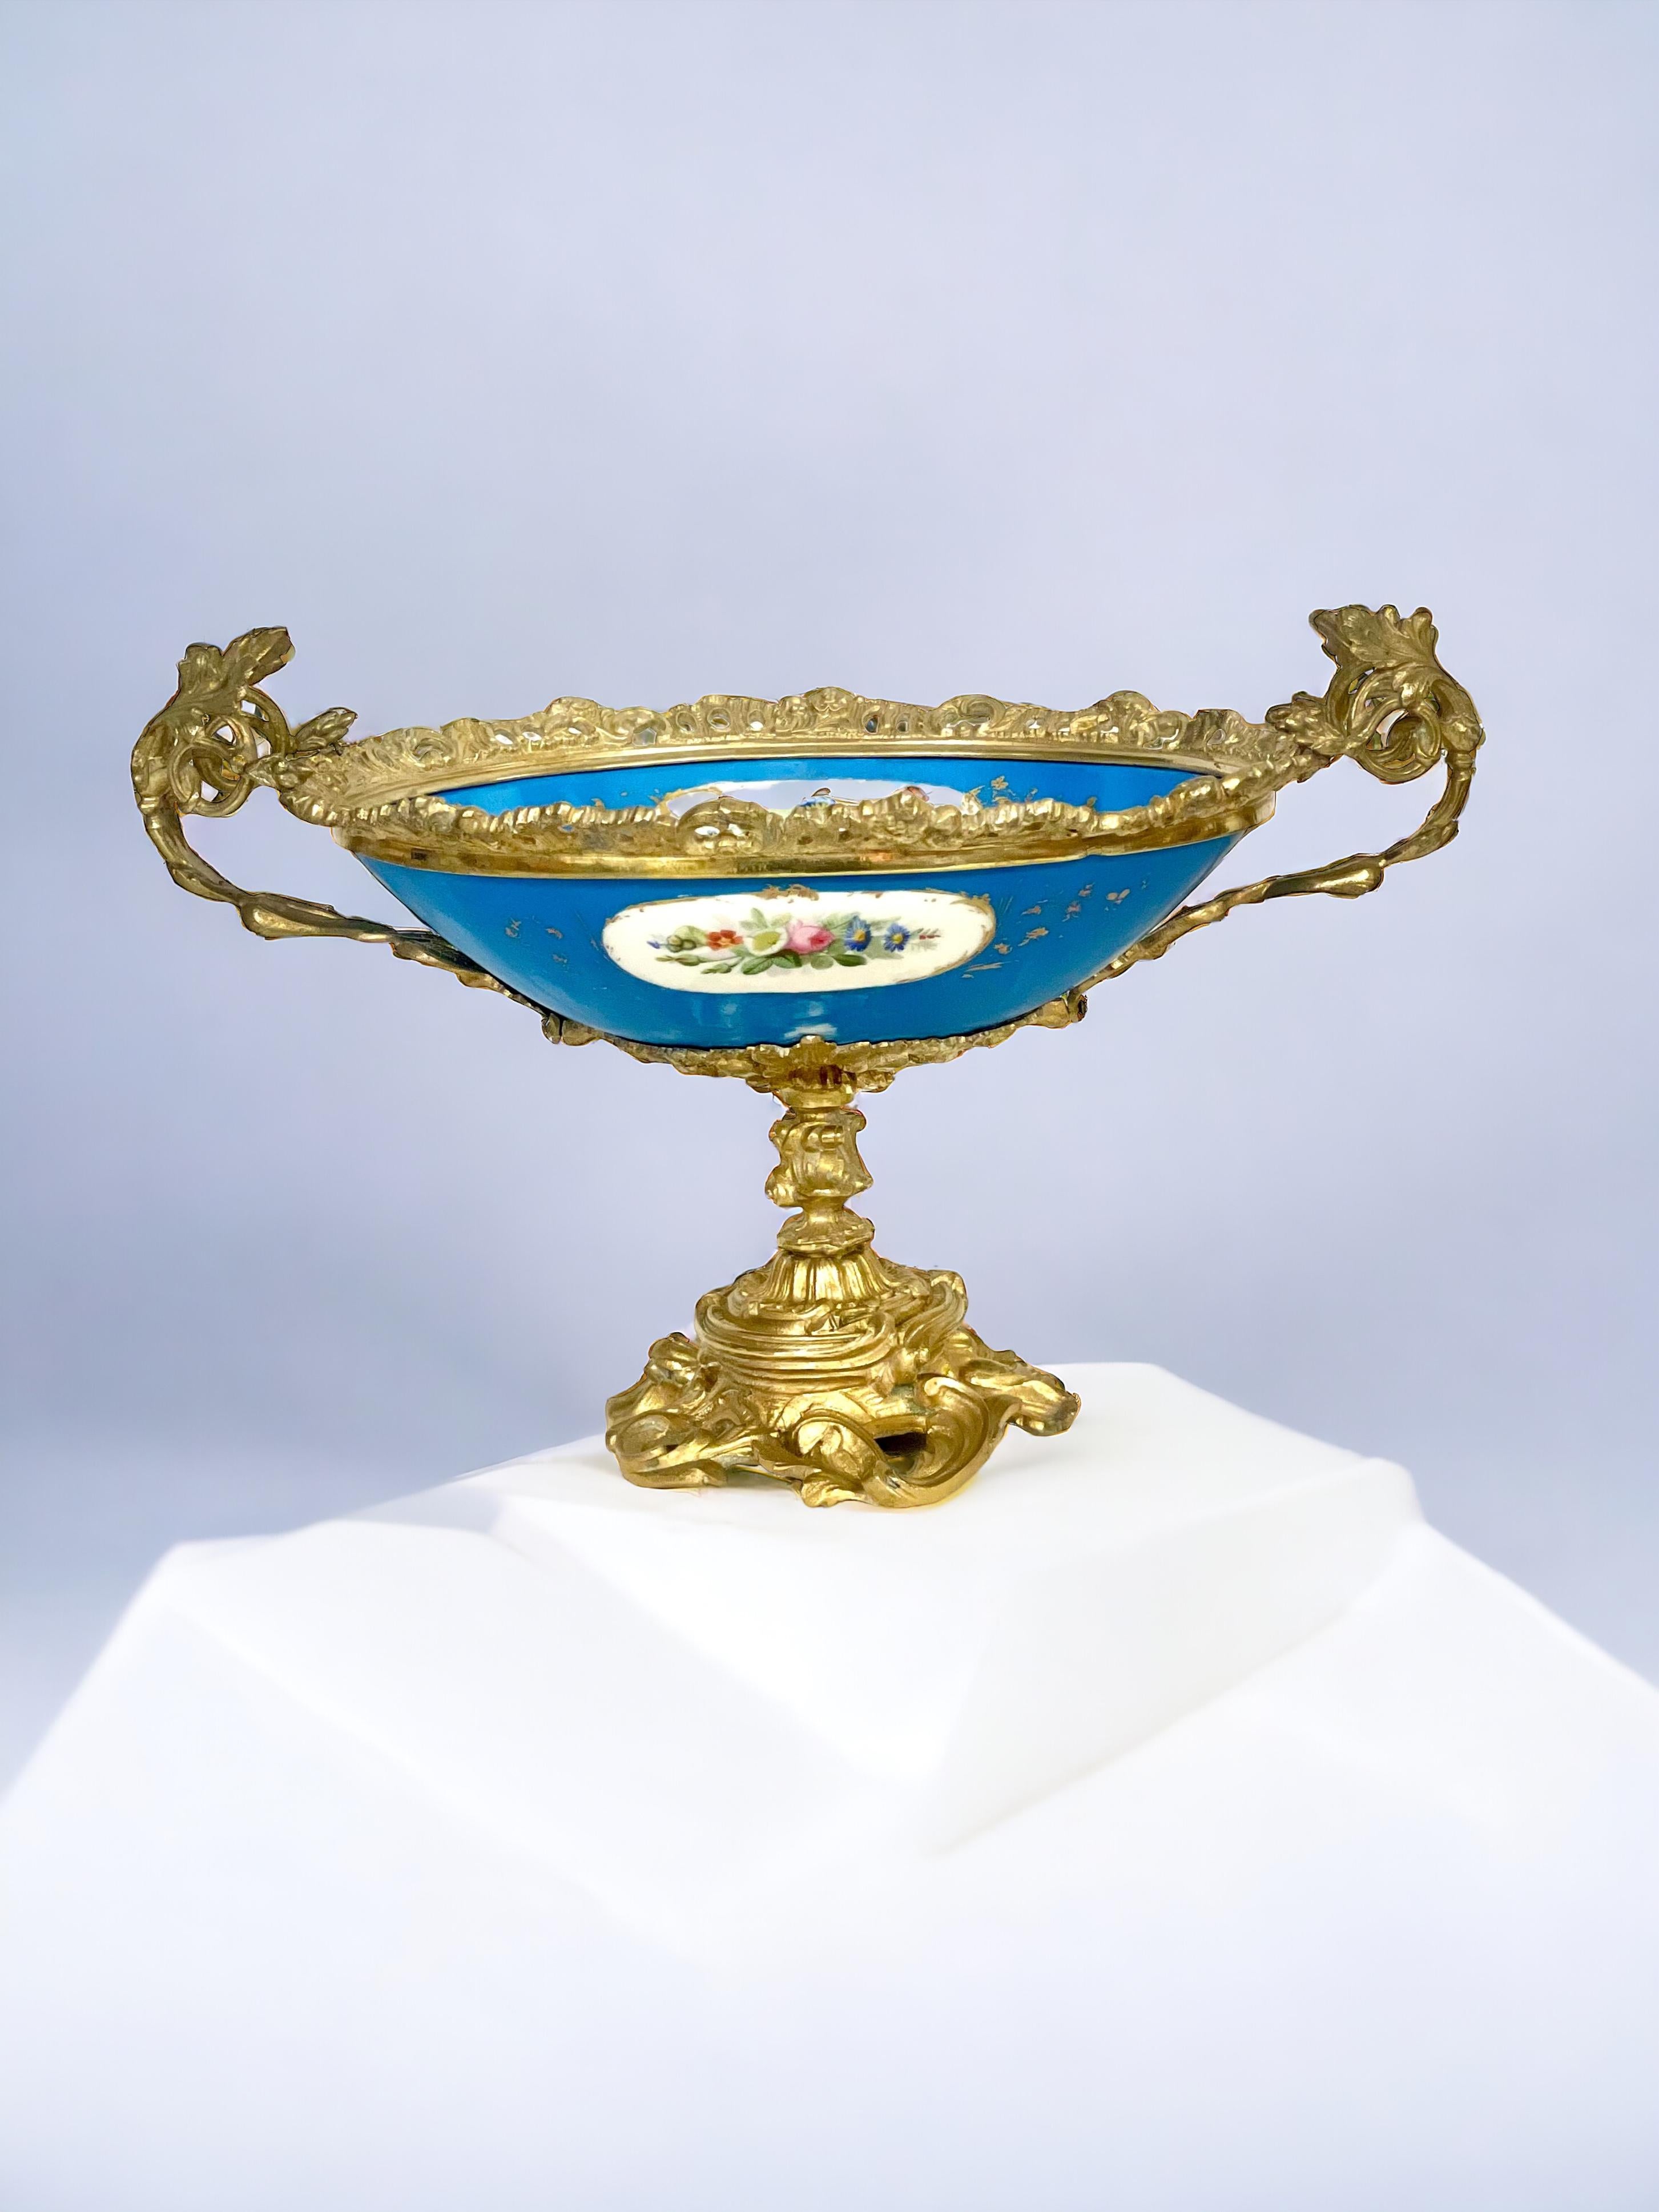 19th Century Napoleon III Sèvres Porcelain and Bronze Centerpiece For Sale 11